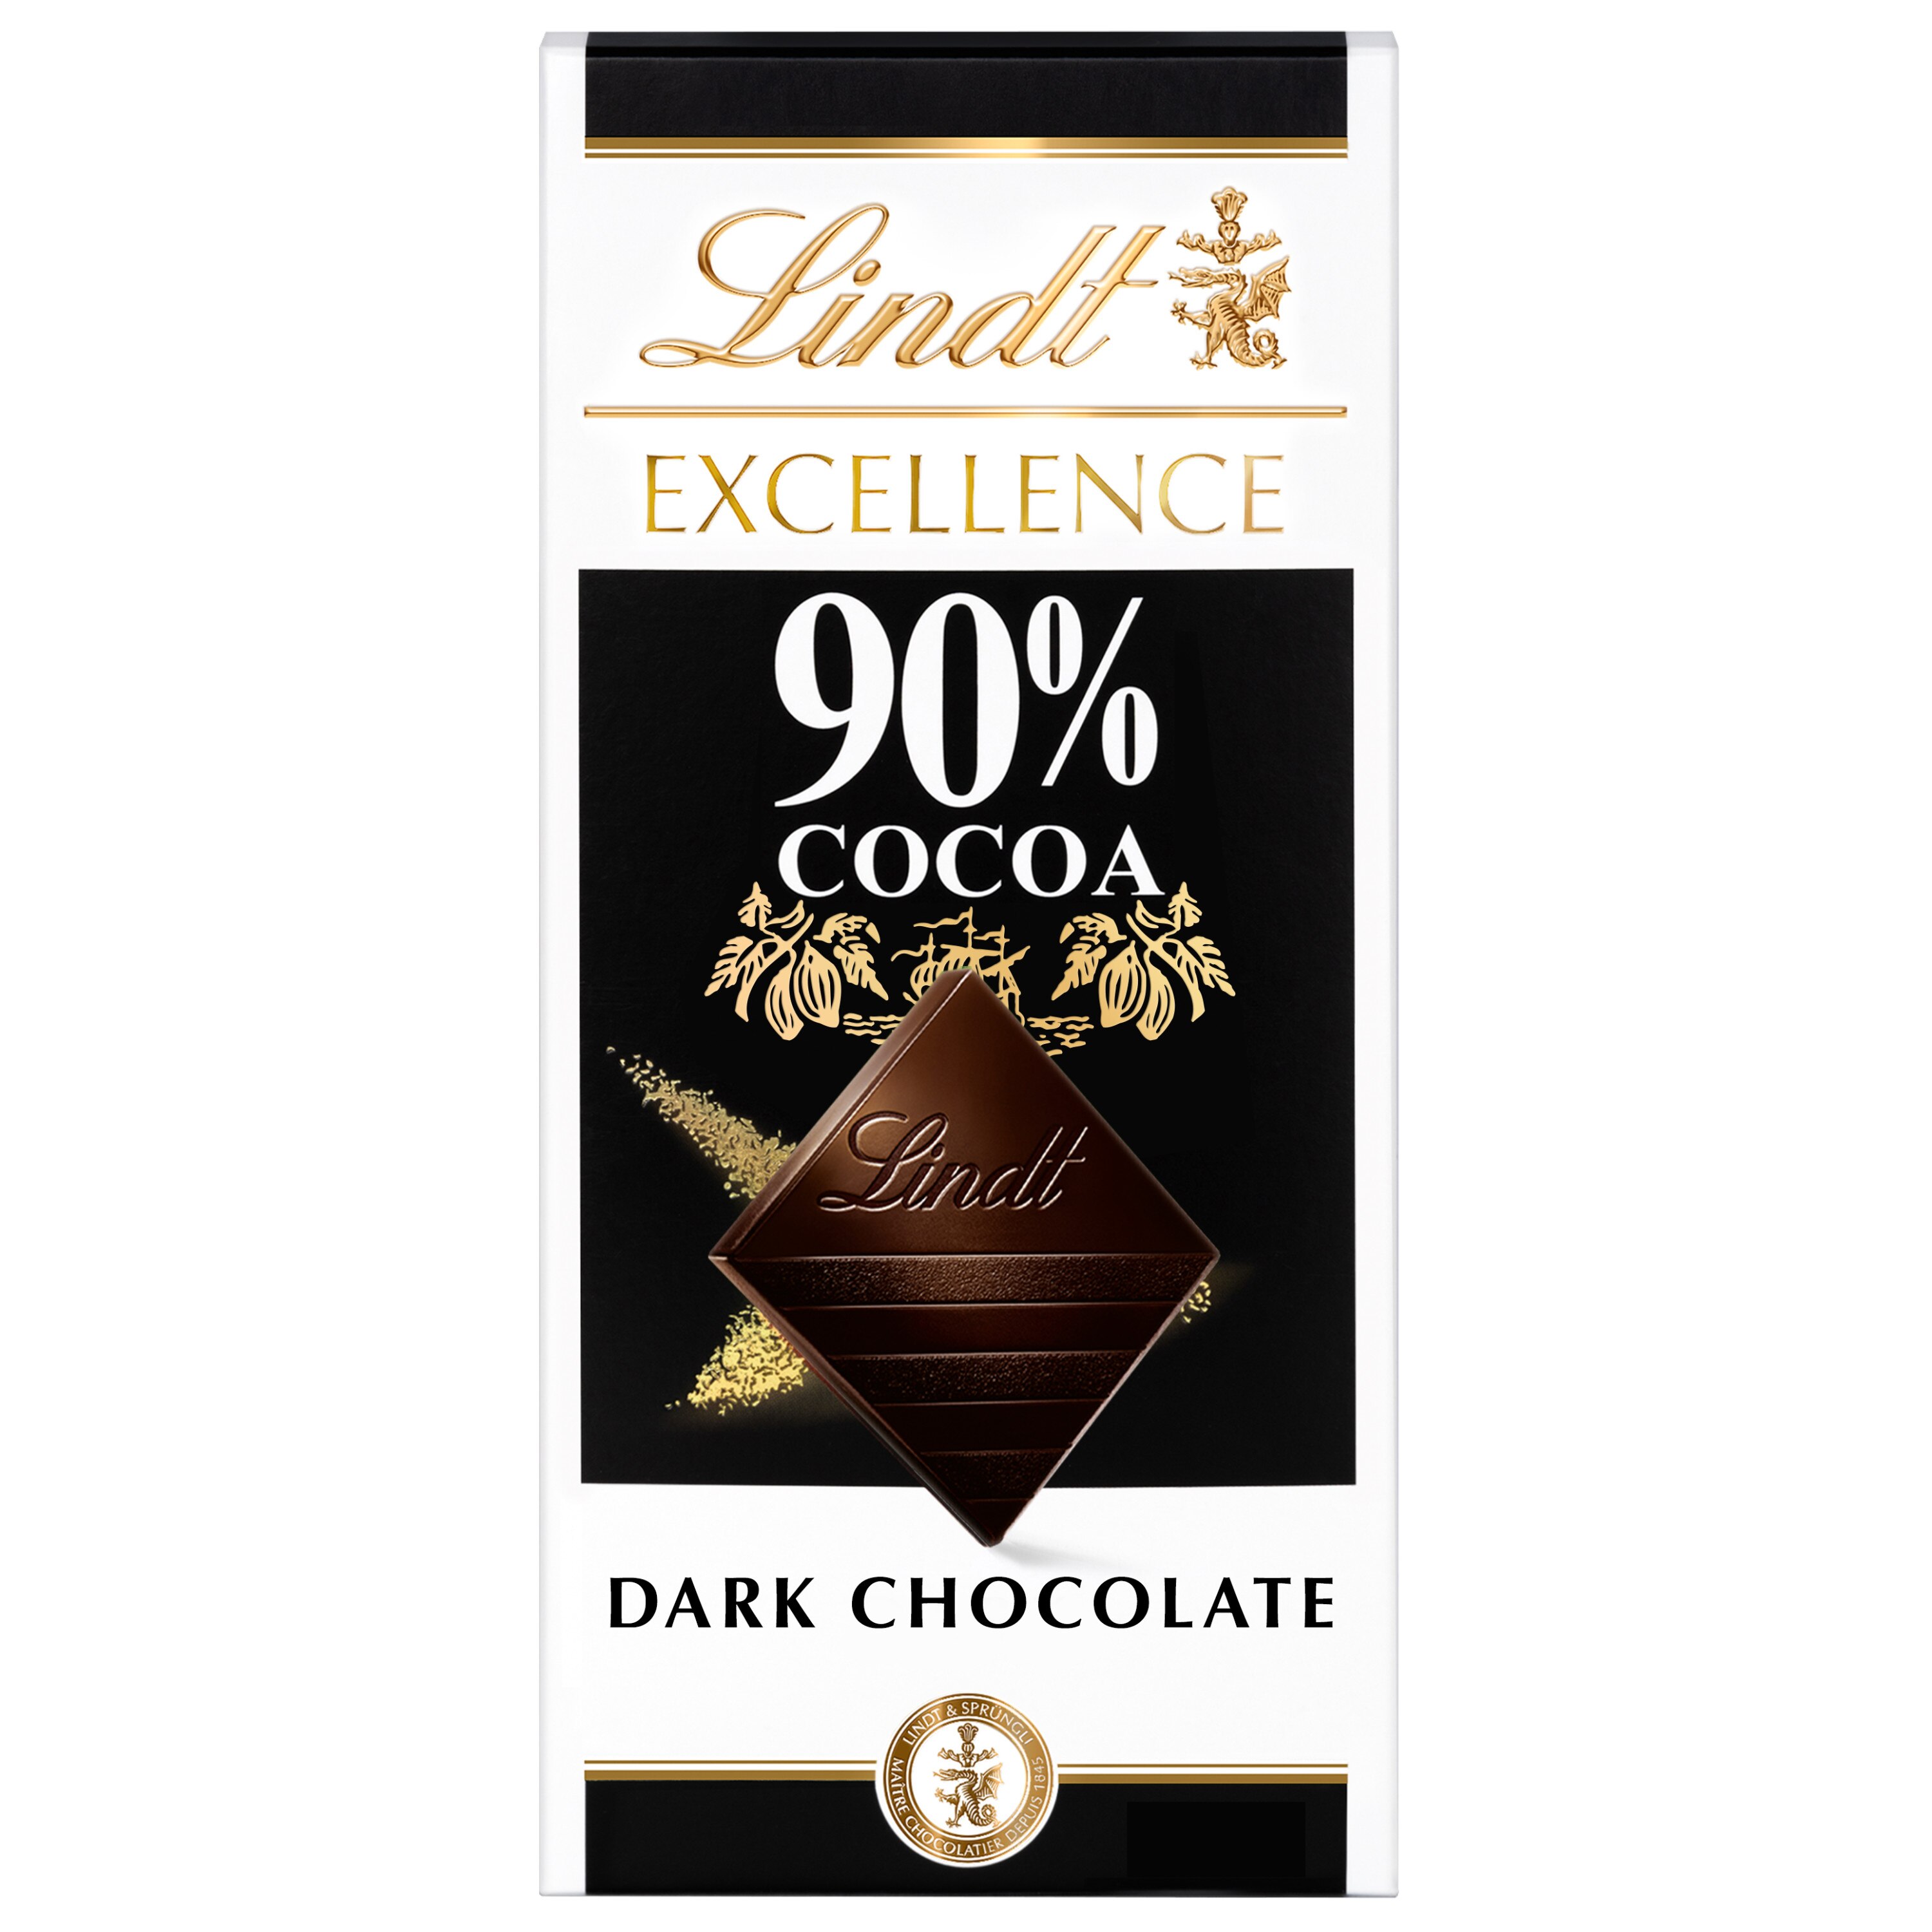 Lindt EXCELLENCE 90% Cocoa Dark Chocolate Bar, Dark Chocolate Candy, 3.5 oz. Bar